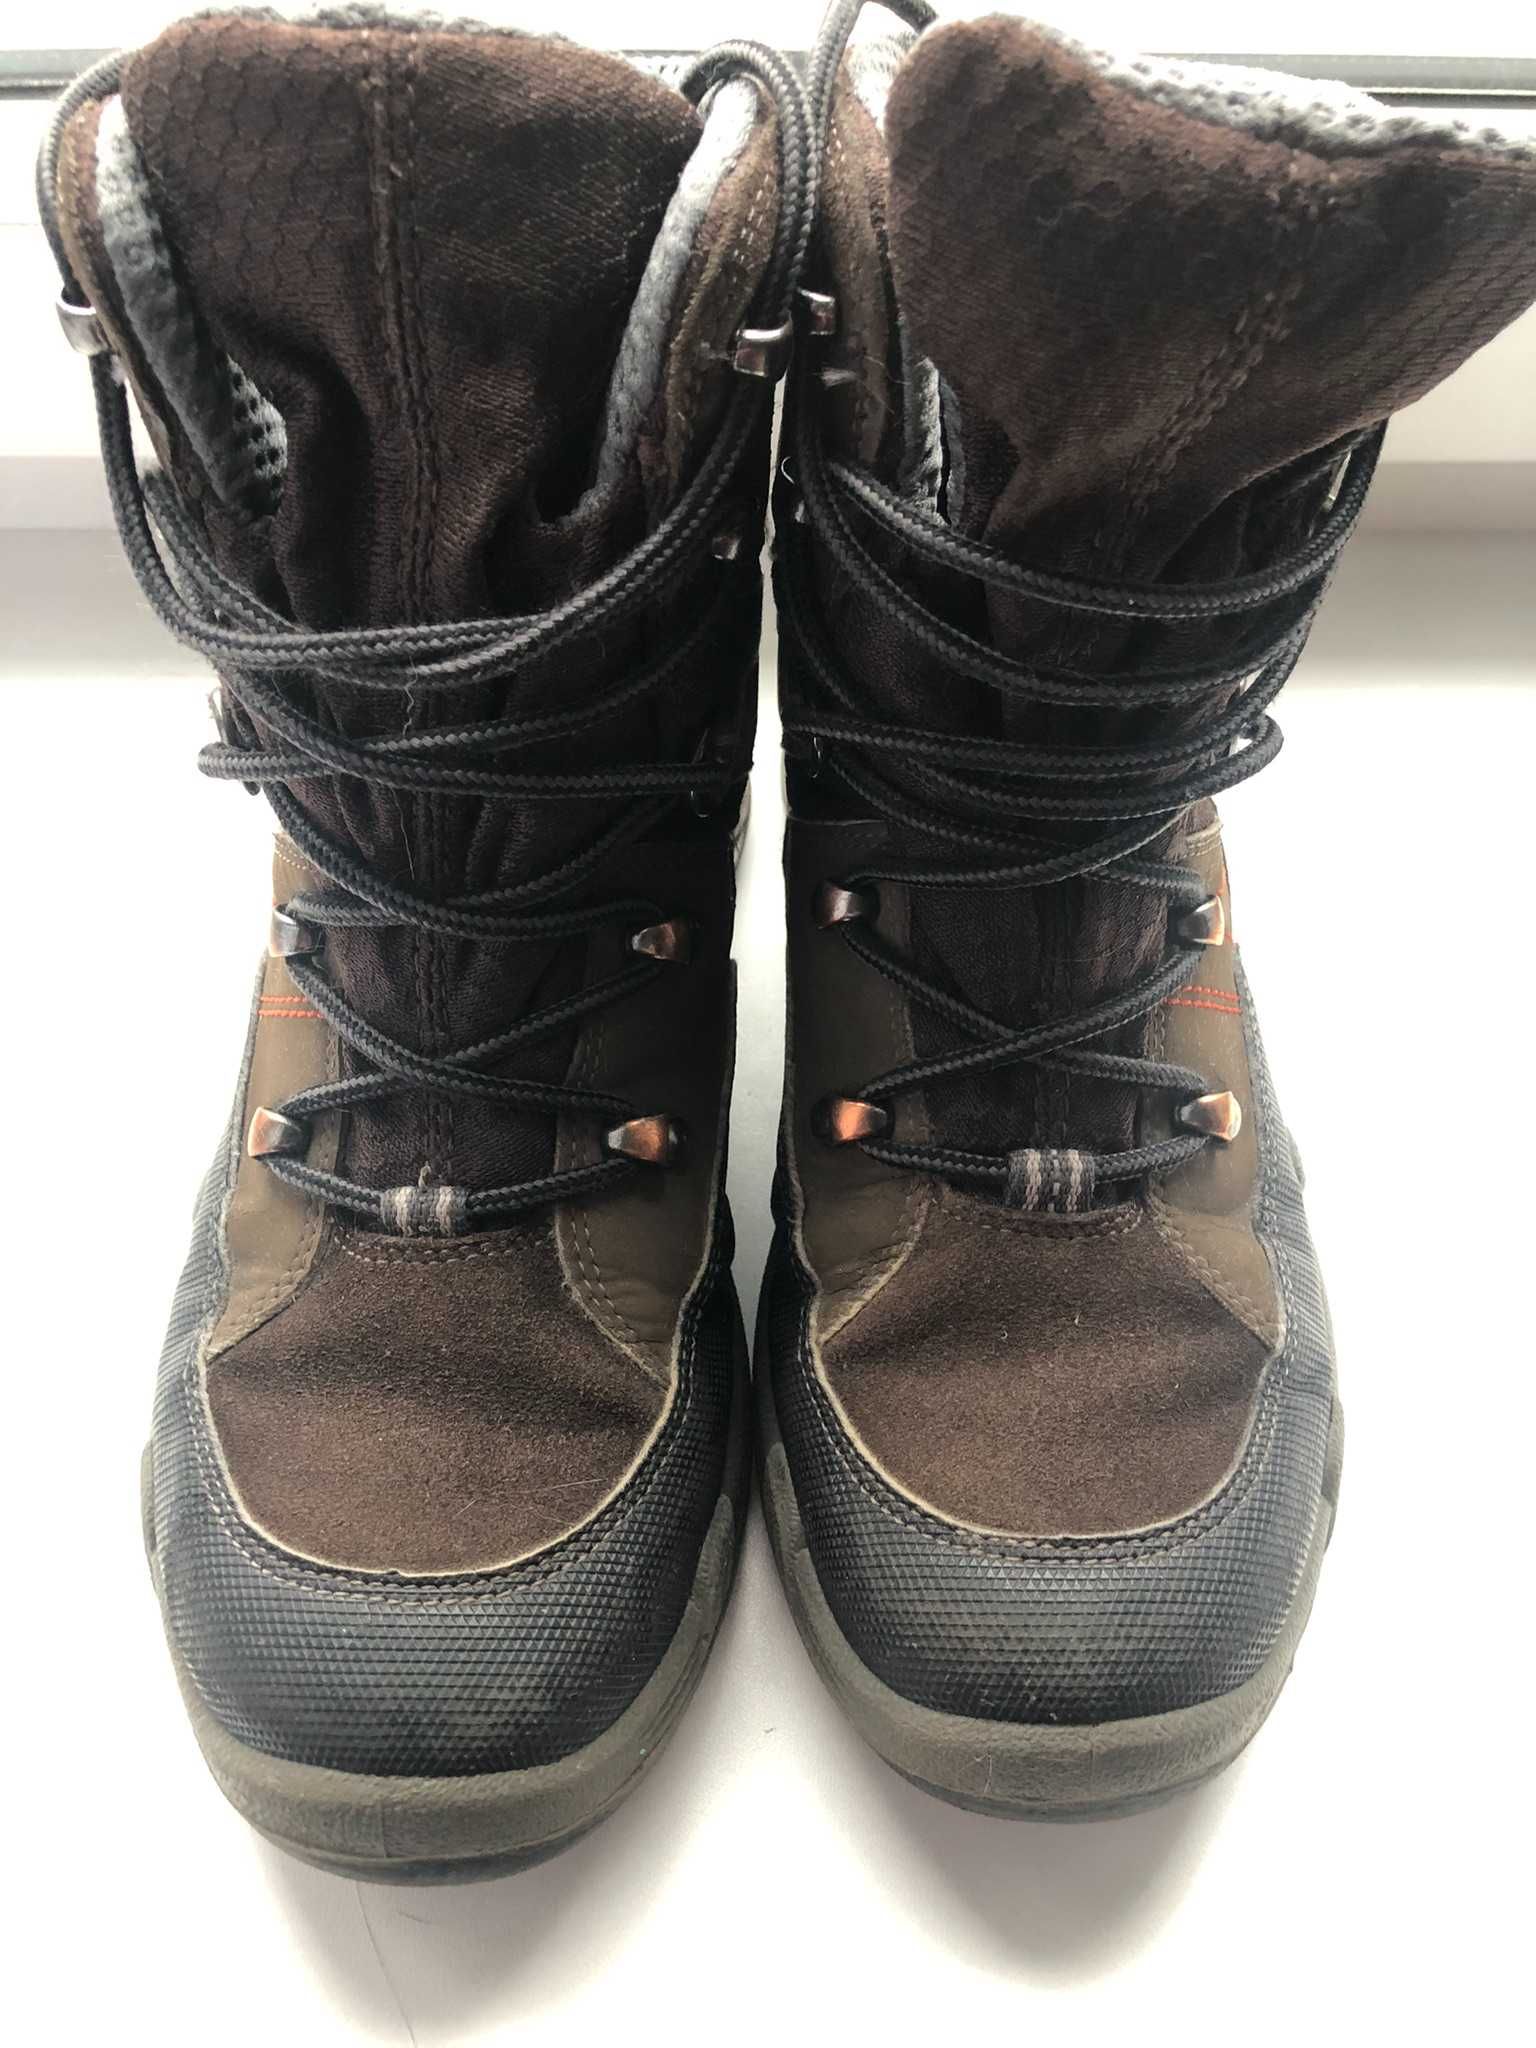 Зимние сапожки, ботинки Superfit с Gore-tex, 36 размер